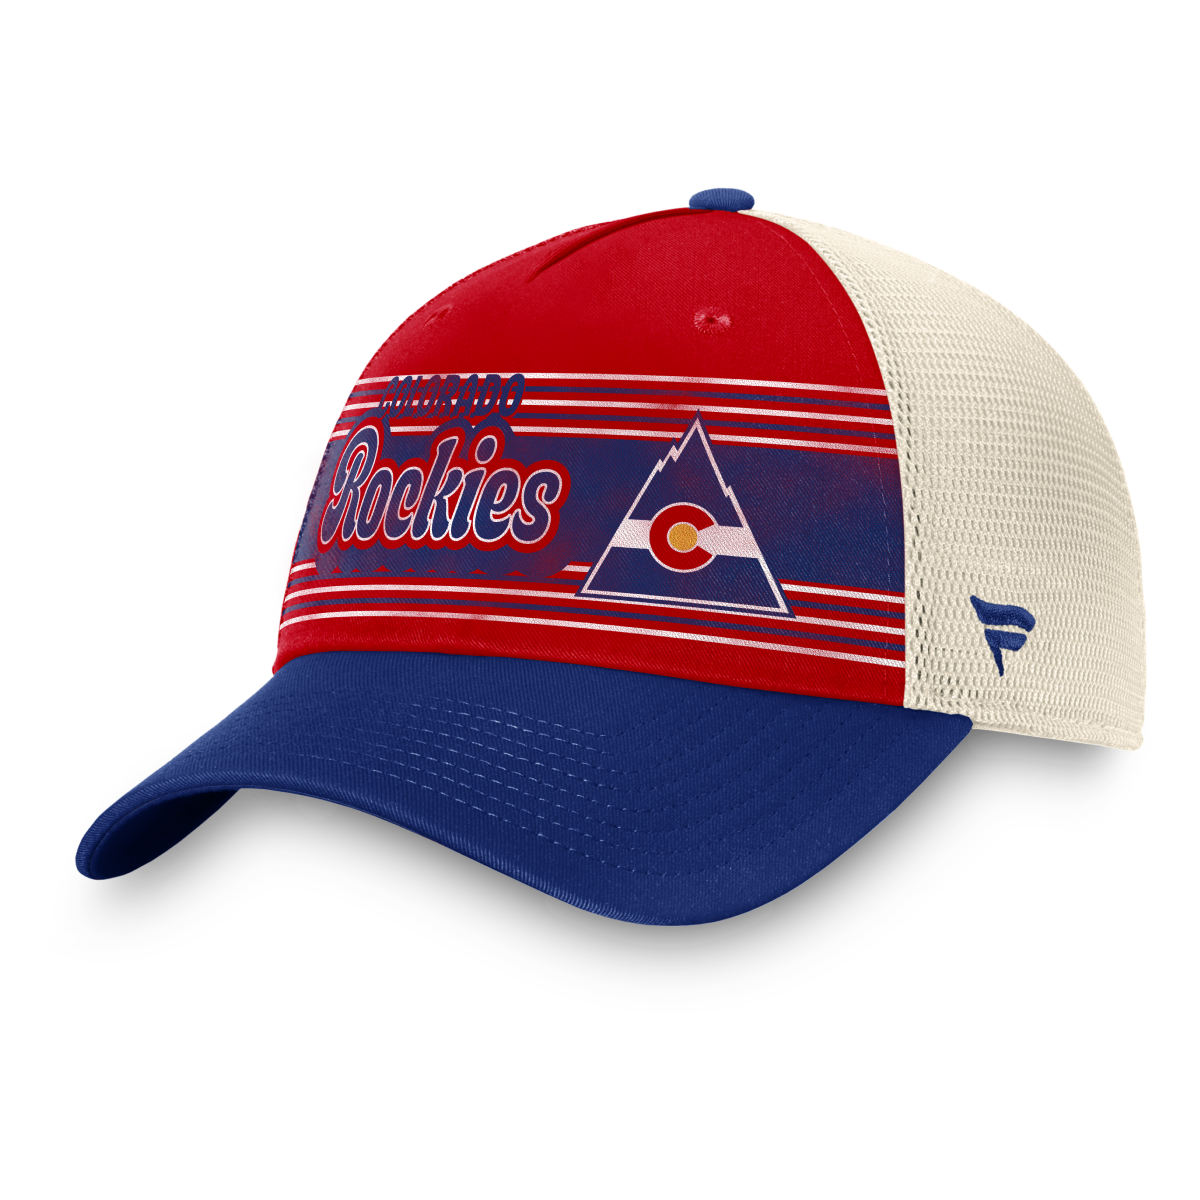 Rockies Hockey Heritage Trucker Hat